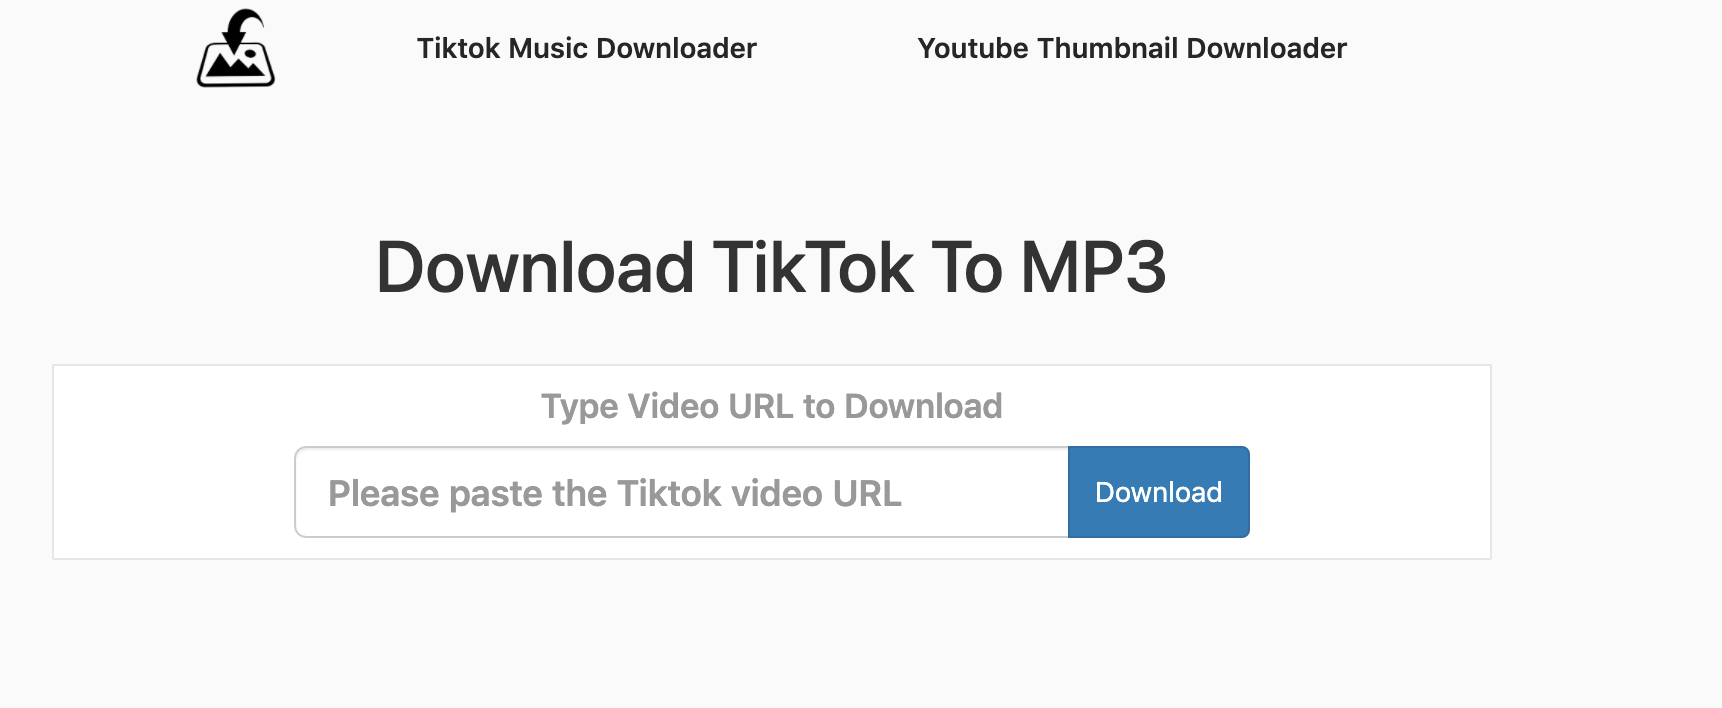 tiktok-music-downloader